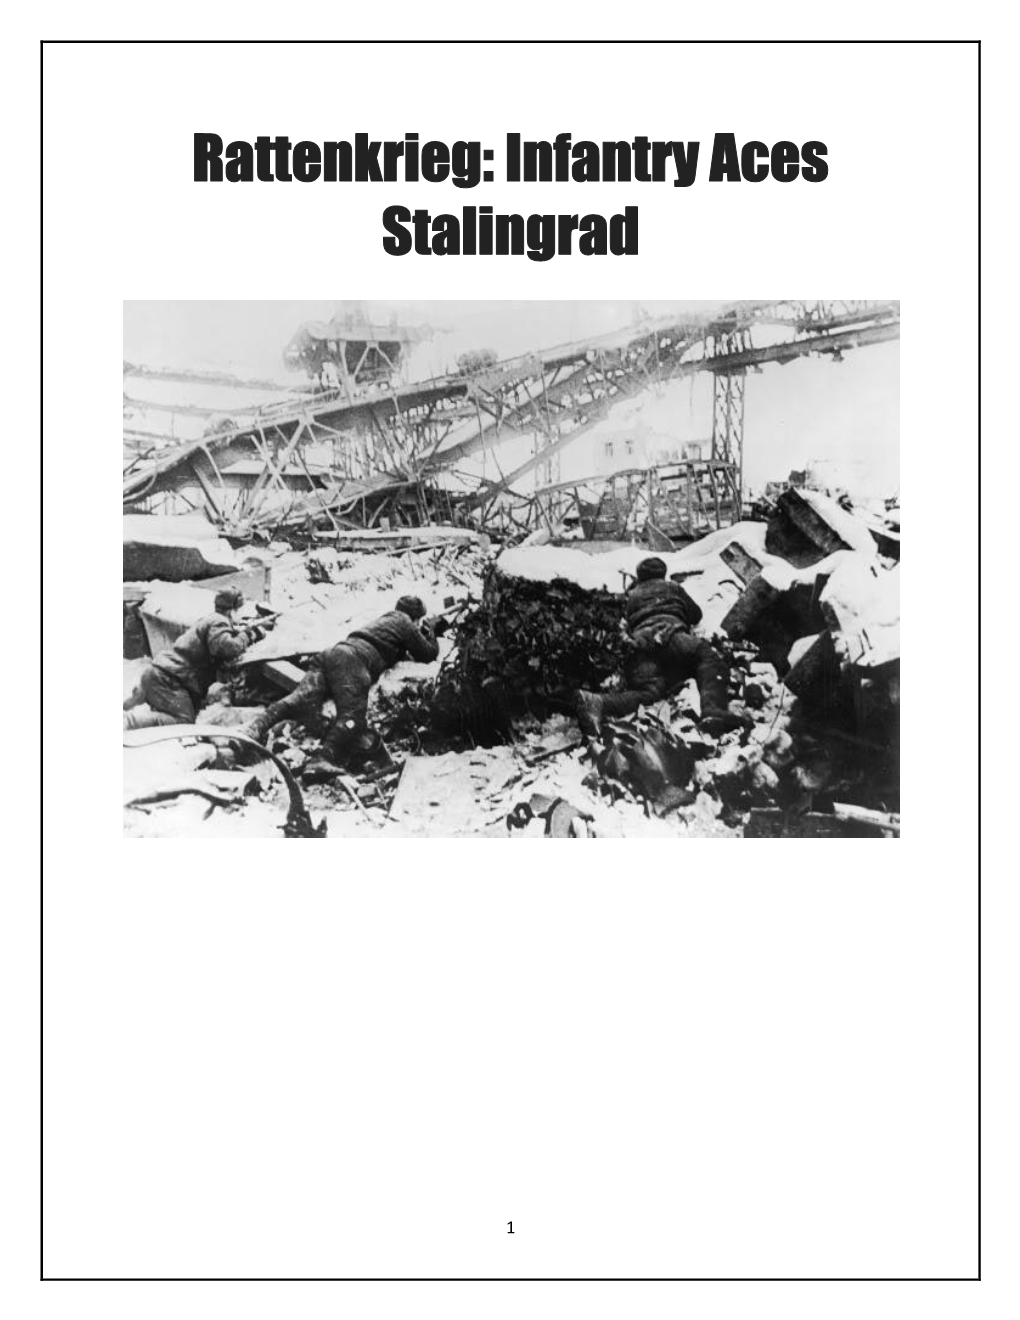 Rattenkrieg: Infantry Aces Stalingrad